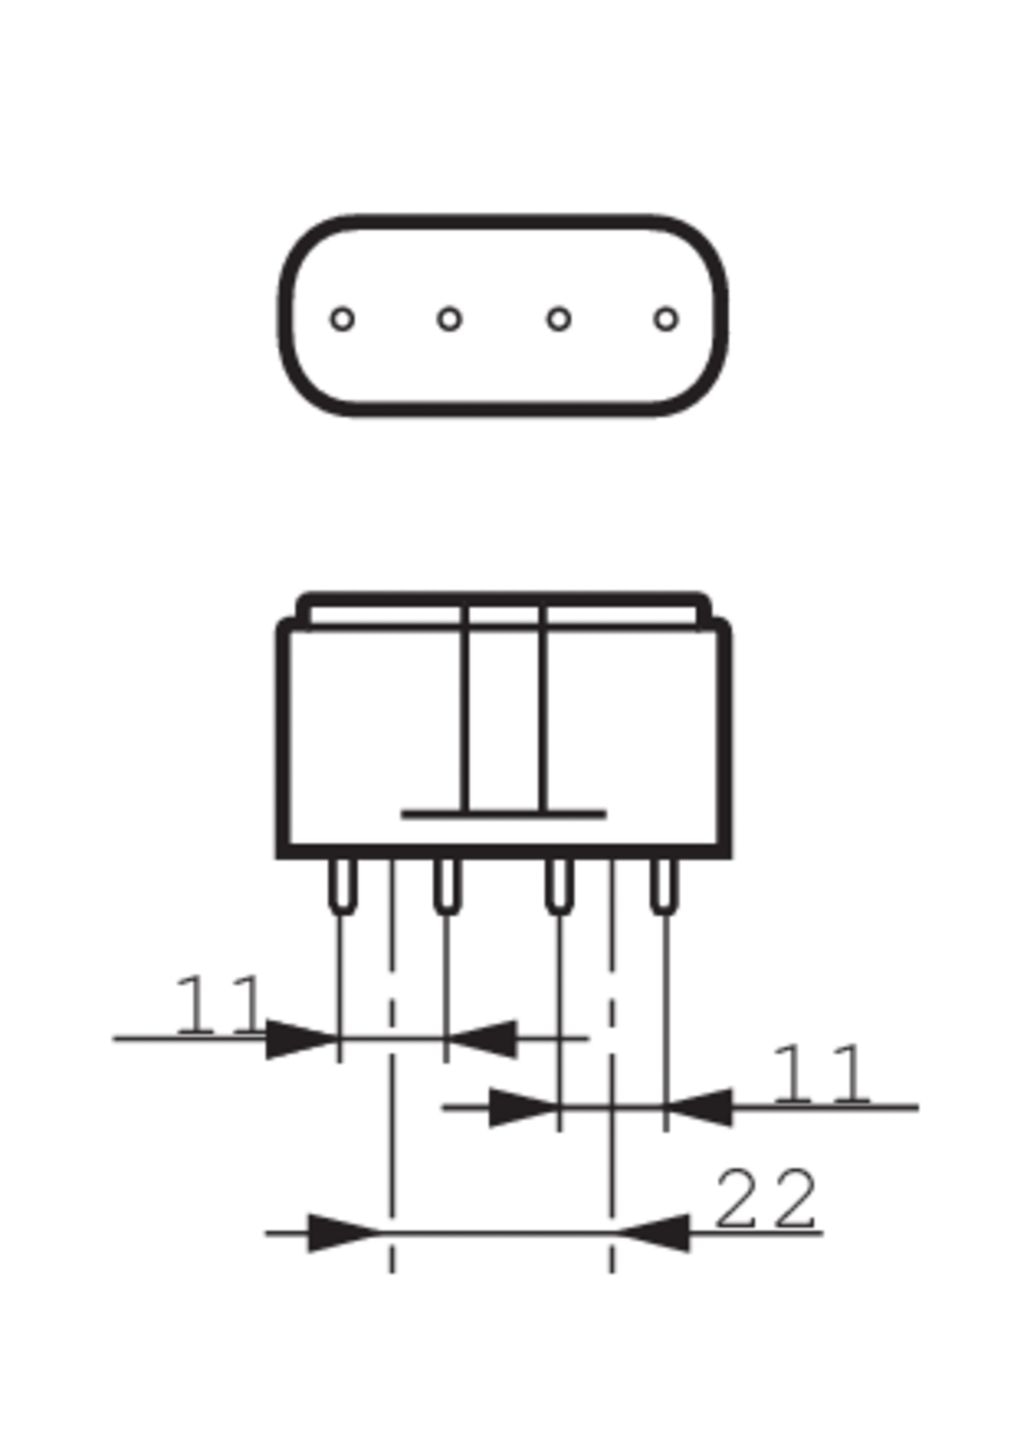 Signify UVC disinfection lamp TUV PL-L 60W/4P HO 1CT/25 (TUV PL-L series) - 927909004007